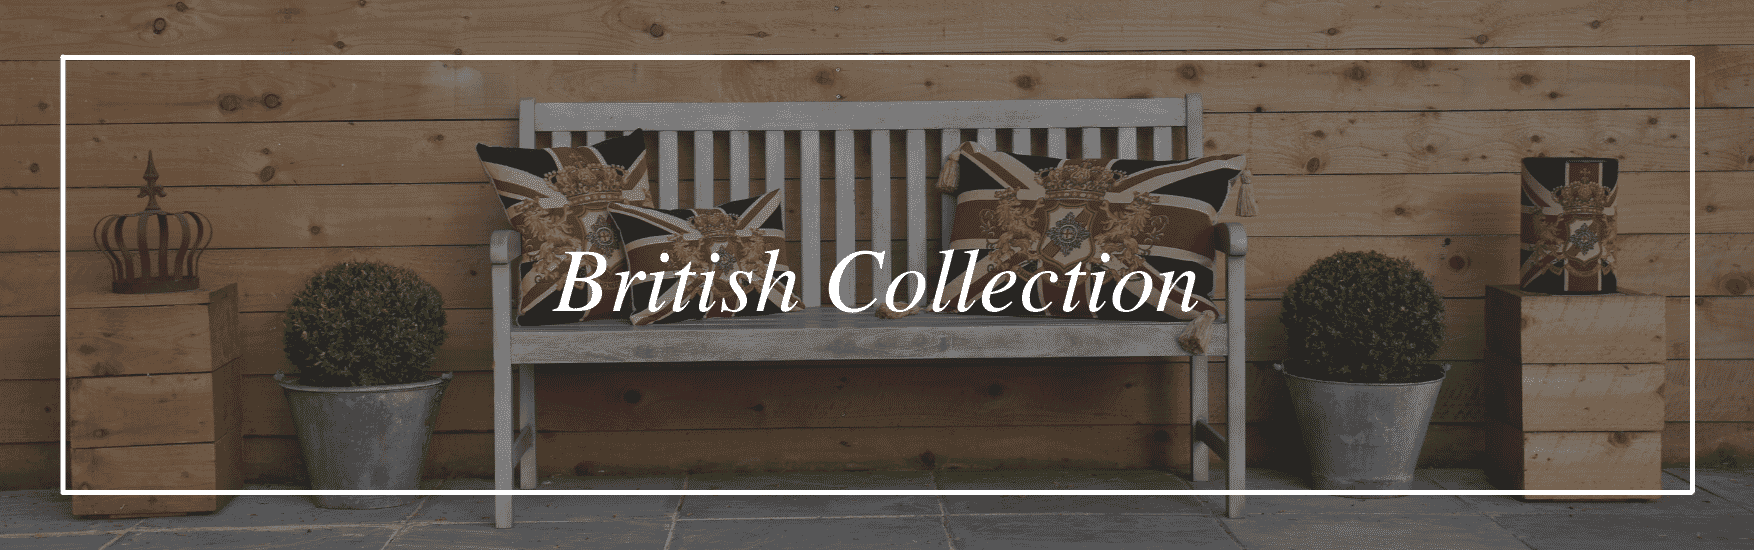 British Collection